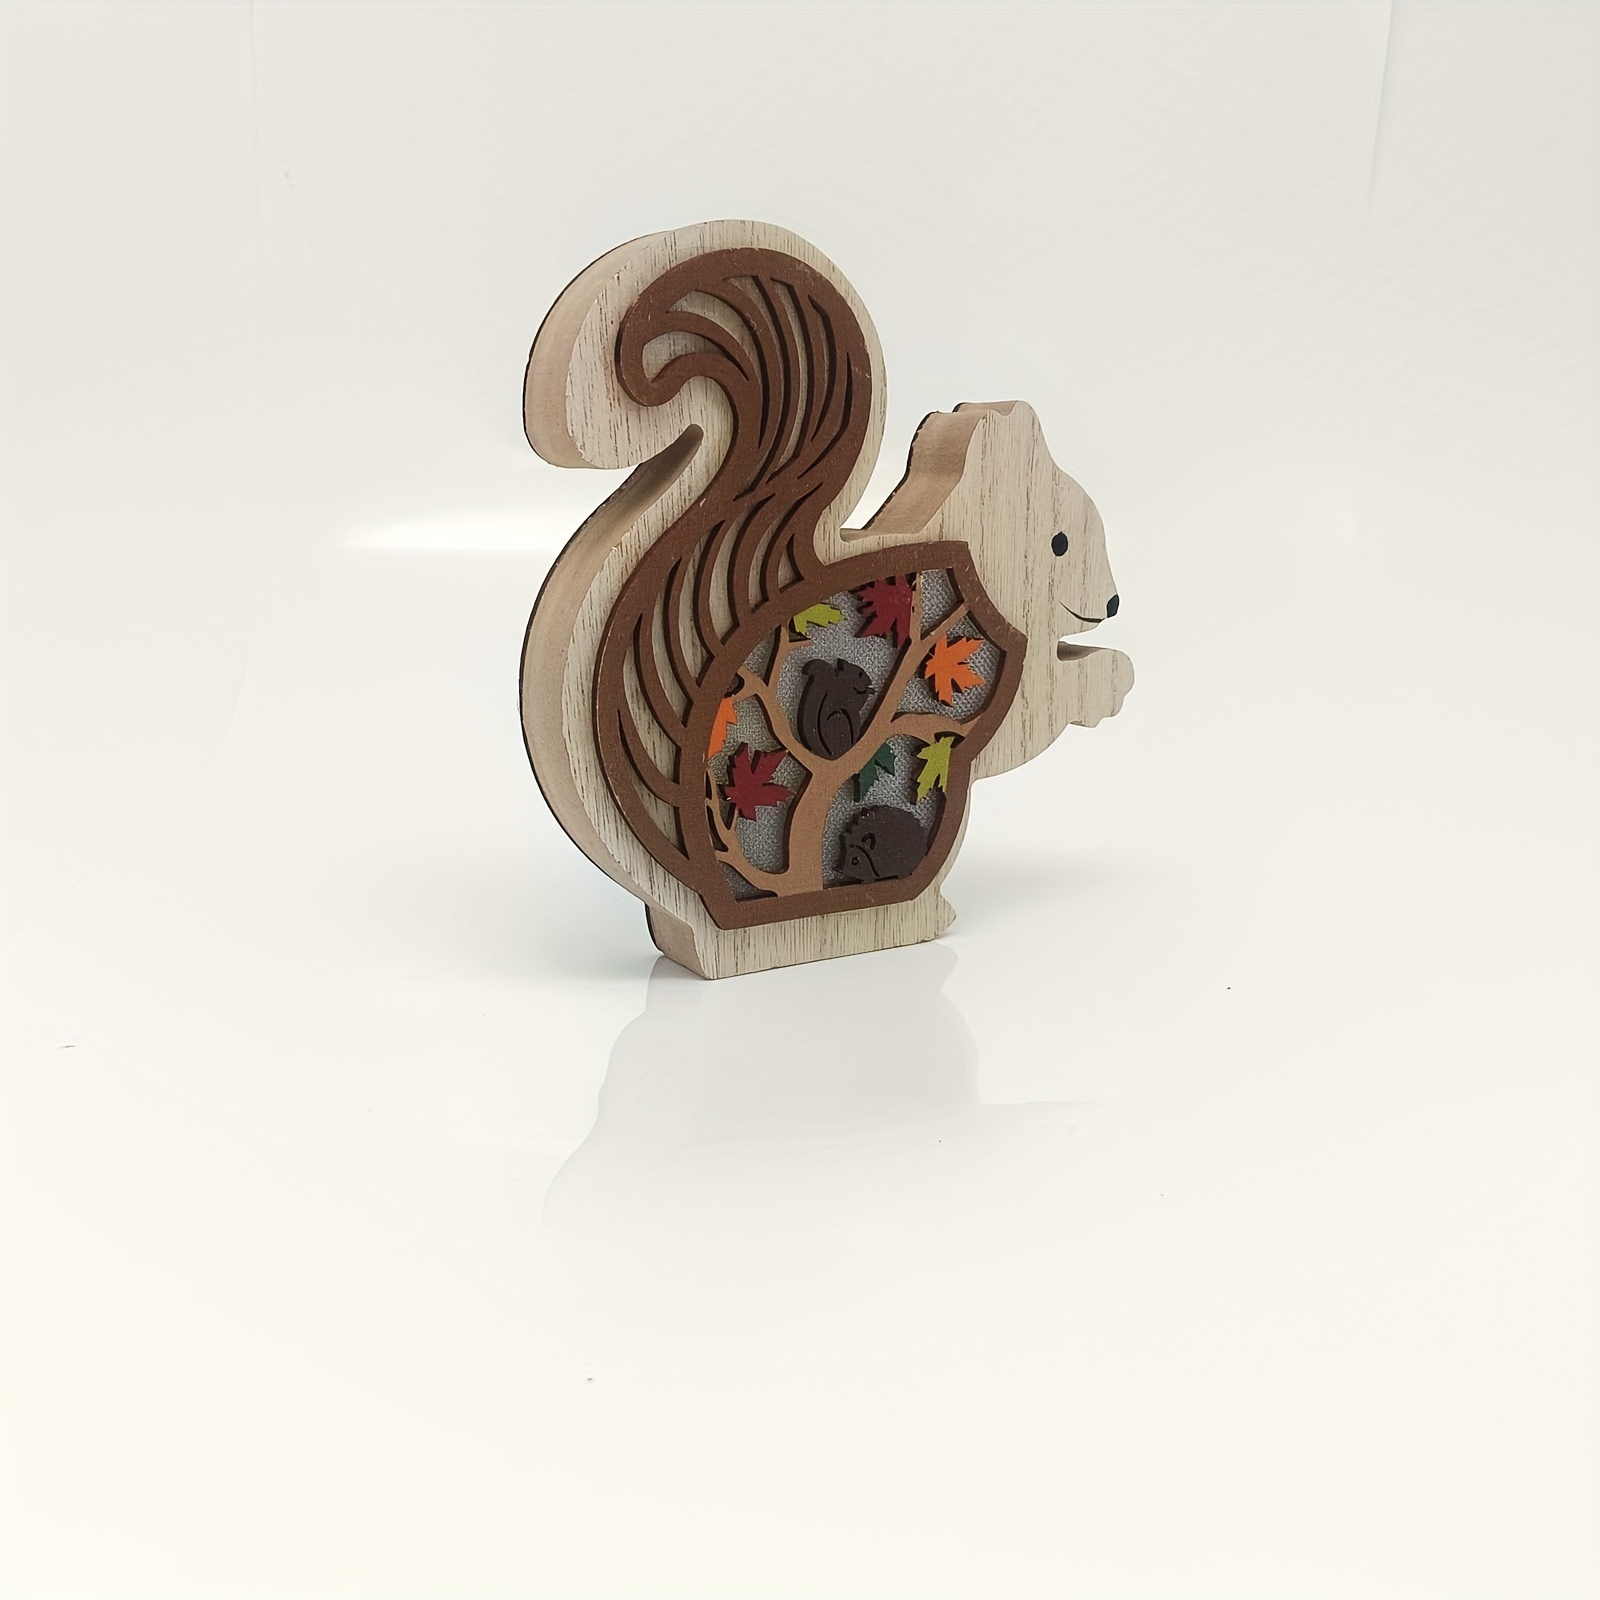 Dropship 1pc, Creative Wooden Crafts Owl Squirrel Ornaments